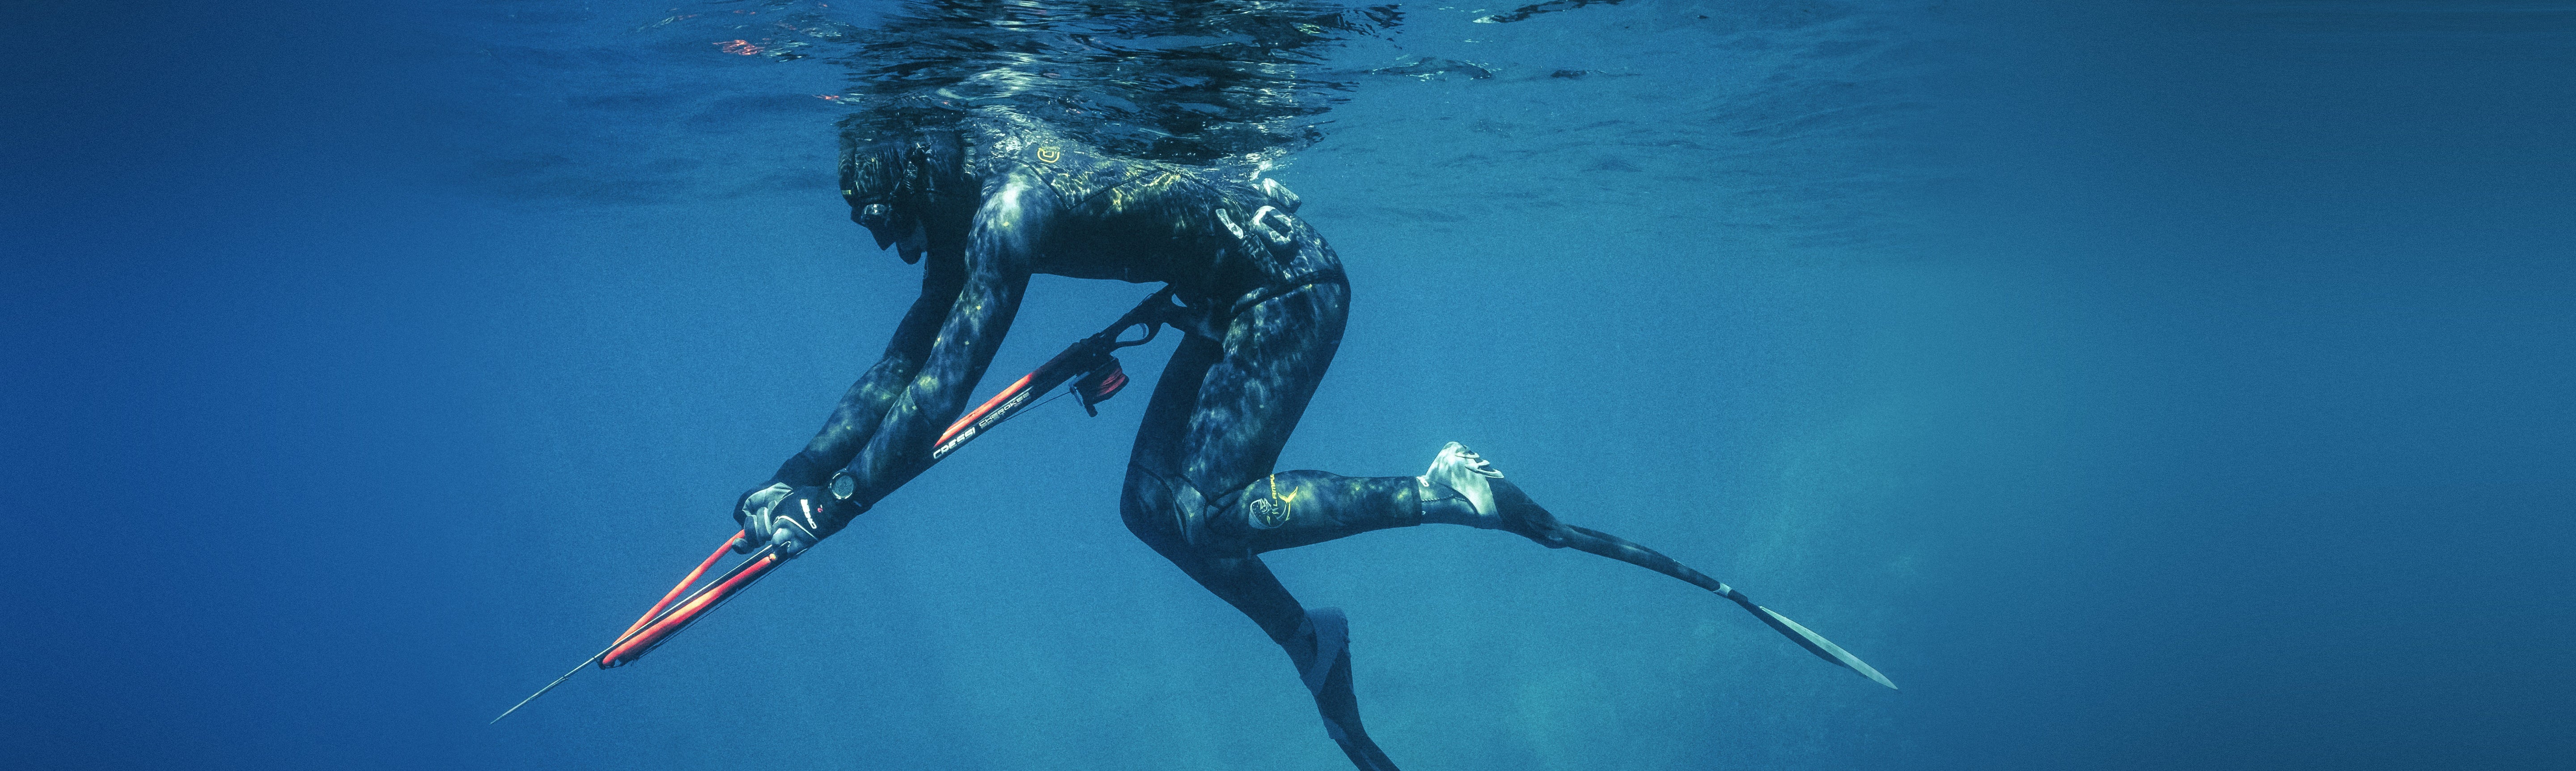 Spearfishing Gear: The Essential Freediving & Spearfishing Equipment